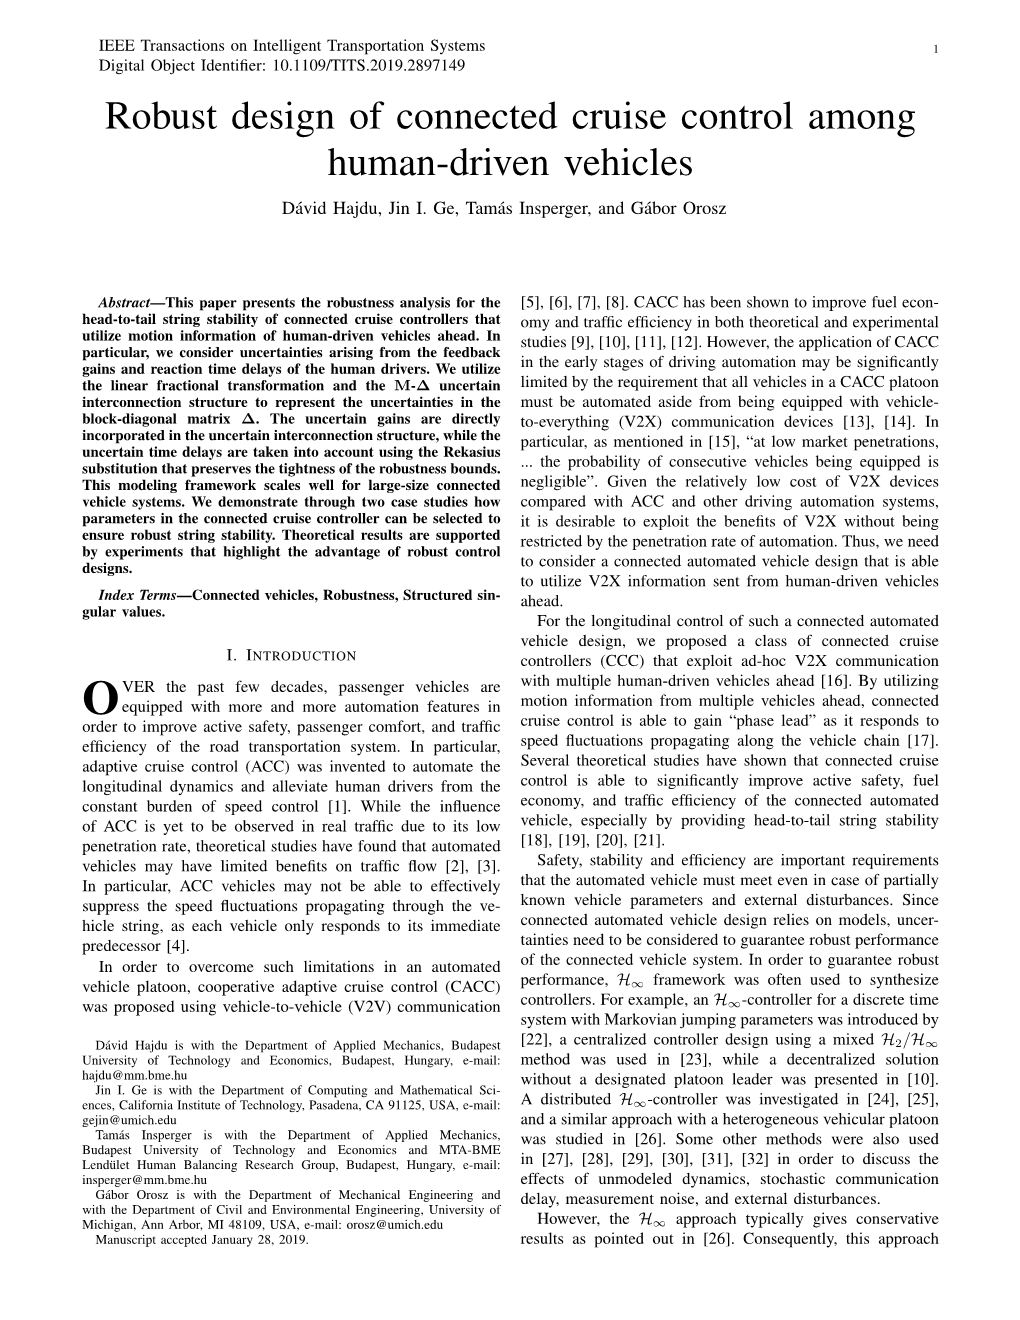 Robust Design of Connected Cruise Control Among Human-Driven Vehicles David´ Hajdu, Jin I